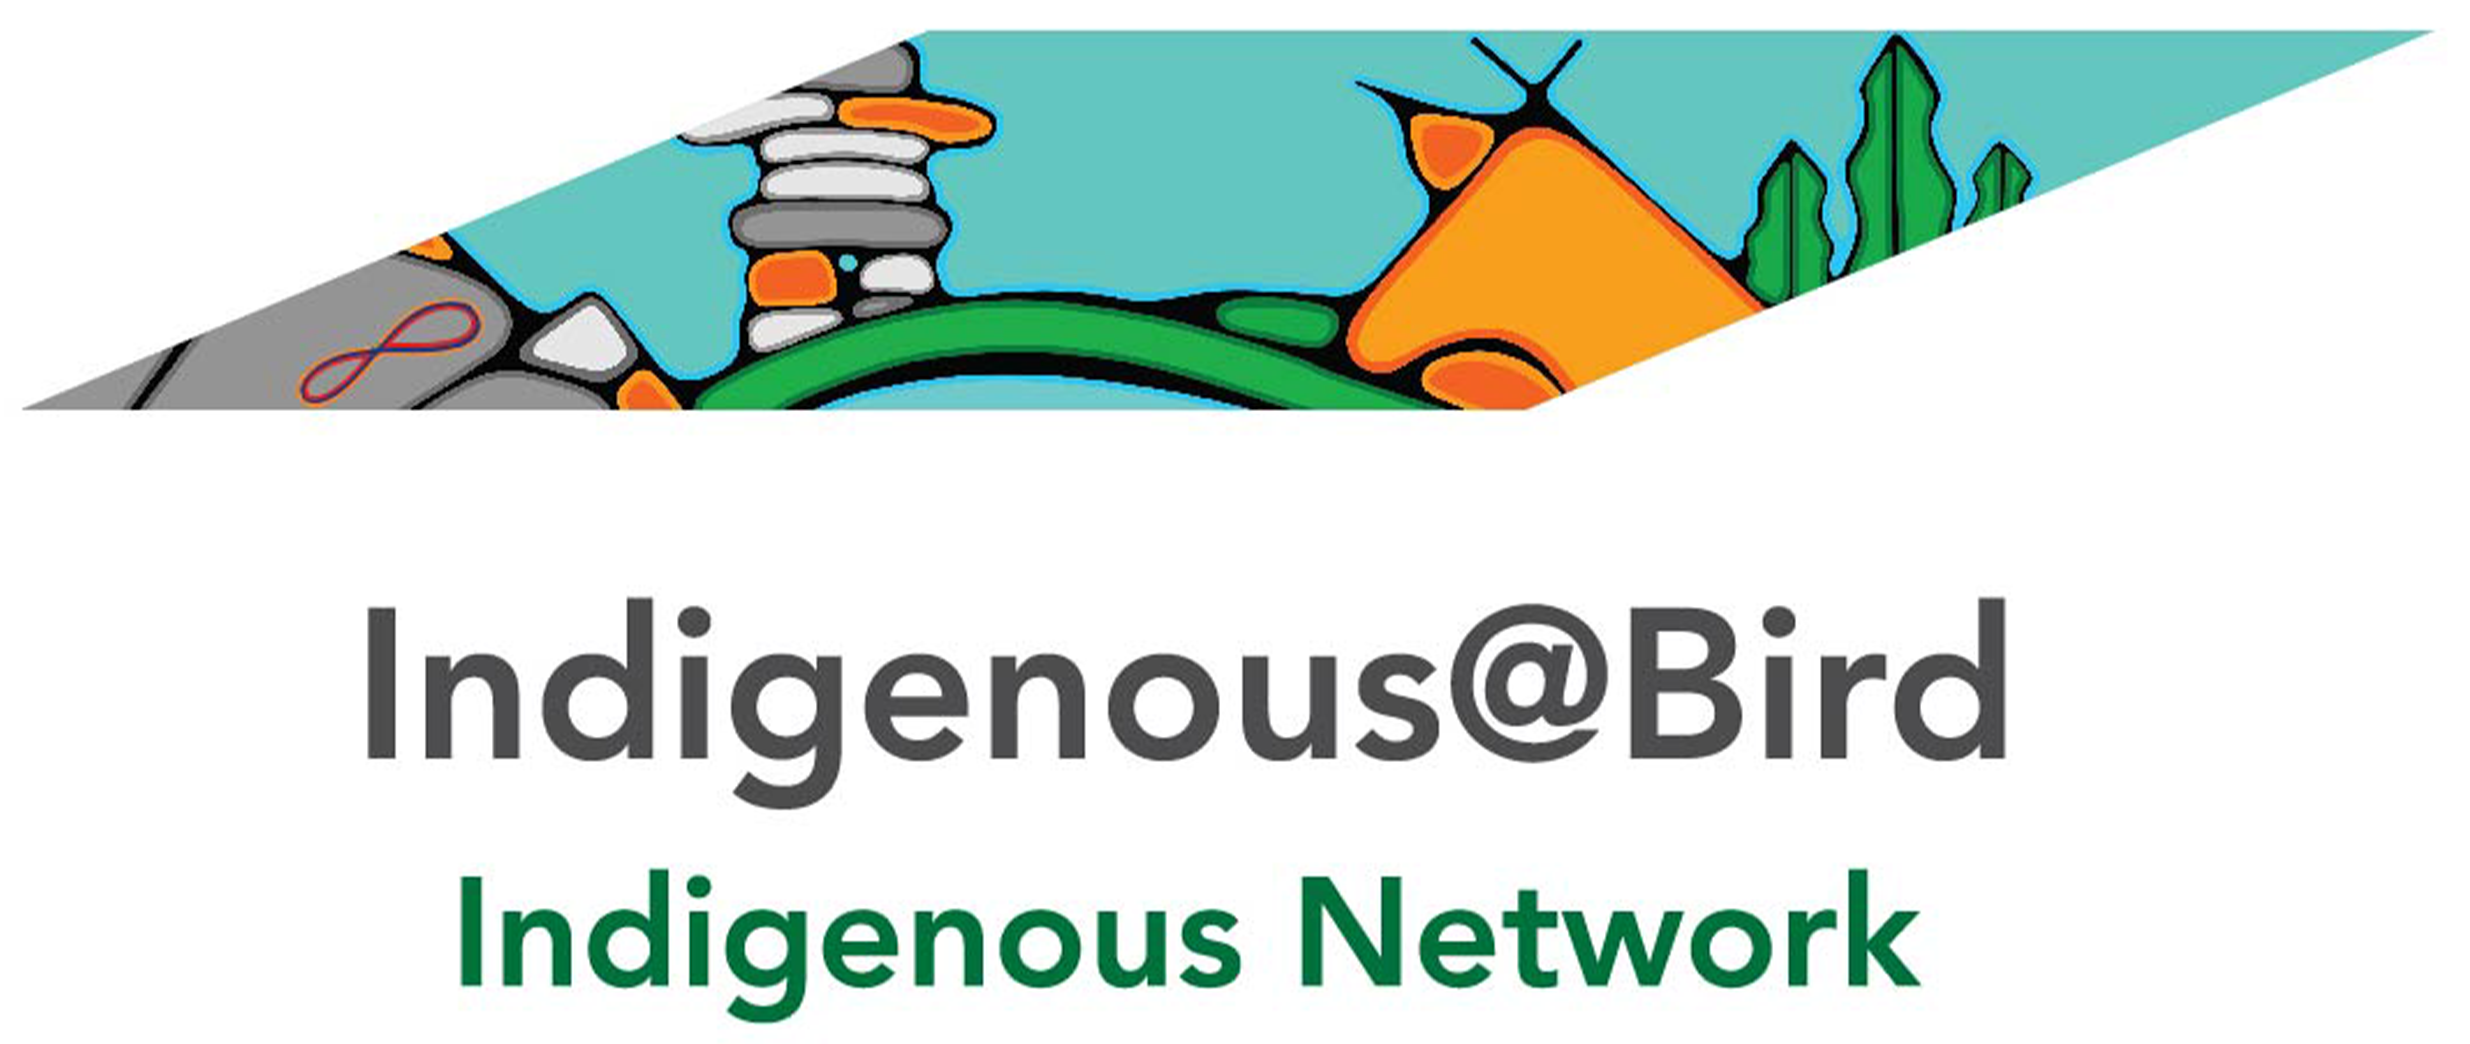 erg-indigenous-bird_logo_final_indigenous-bird_group-logo-re